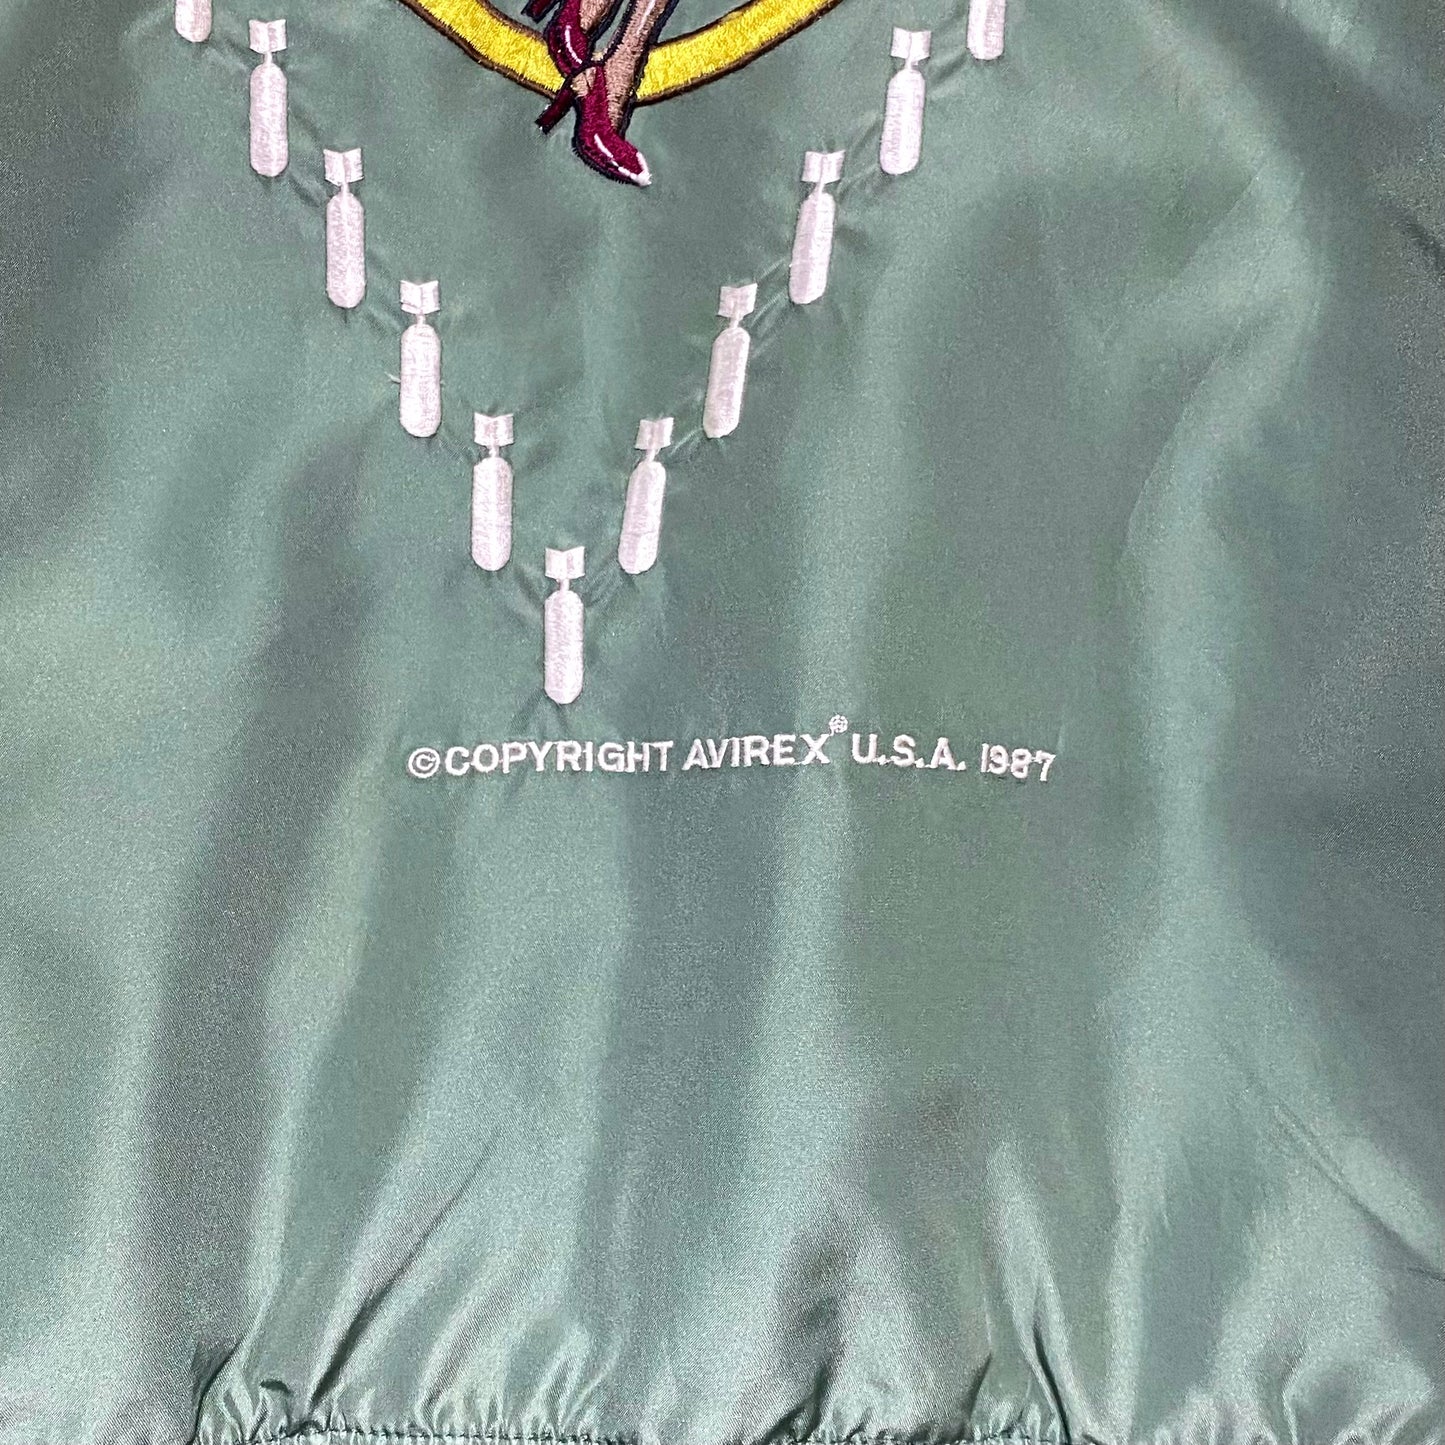 80's "AVIREX" Embroidery MA-1 type jacket